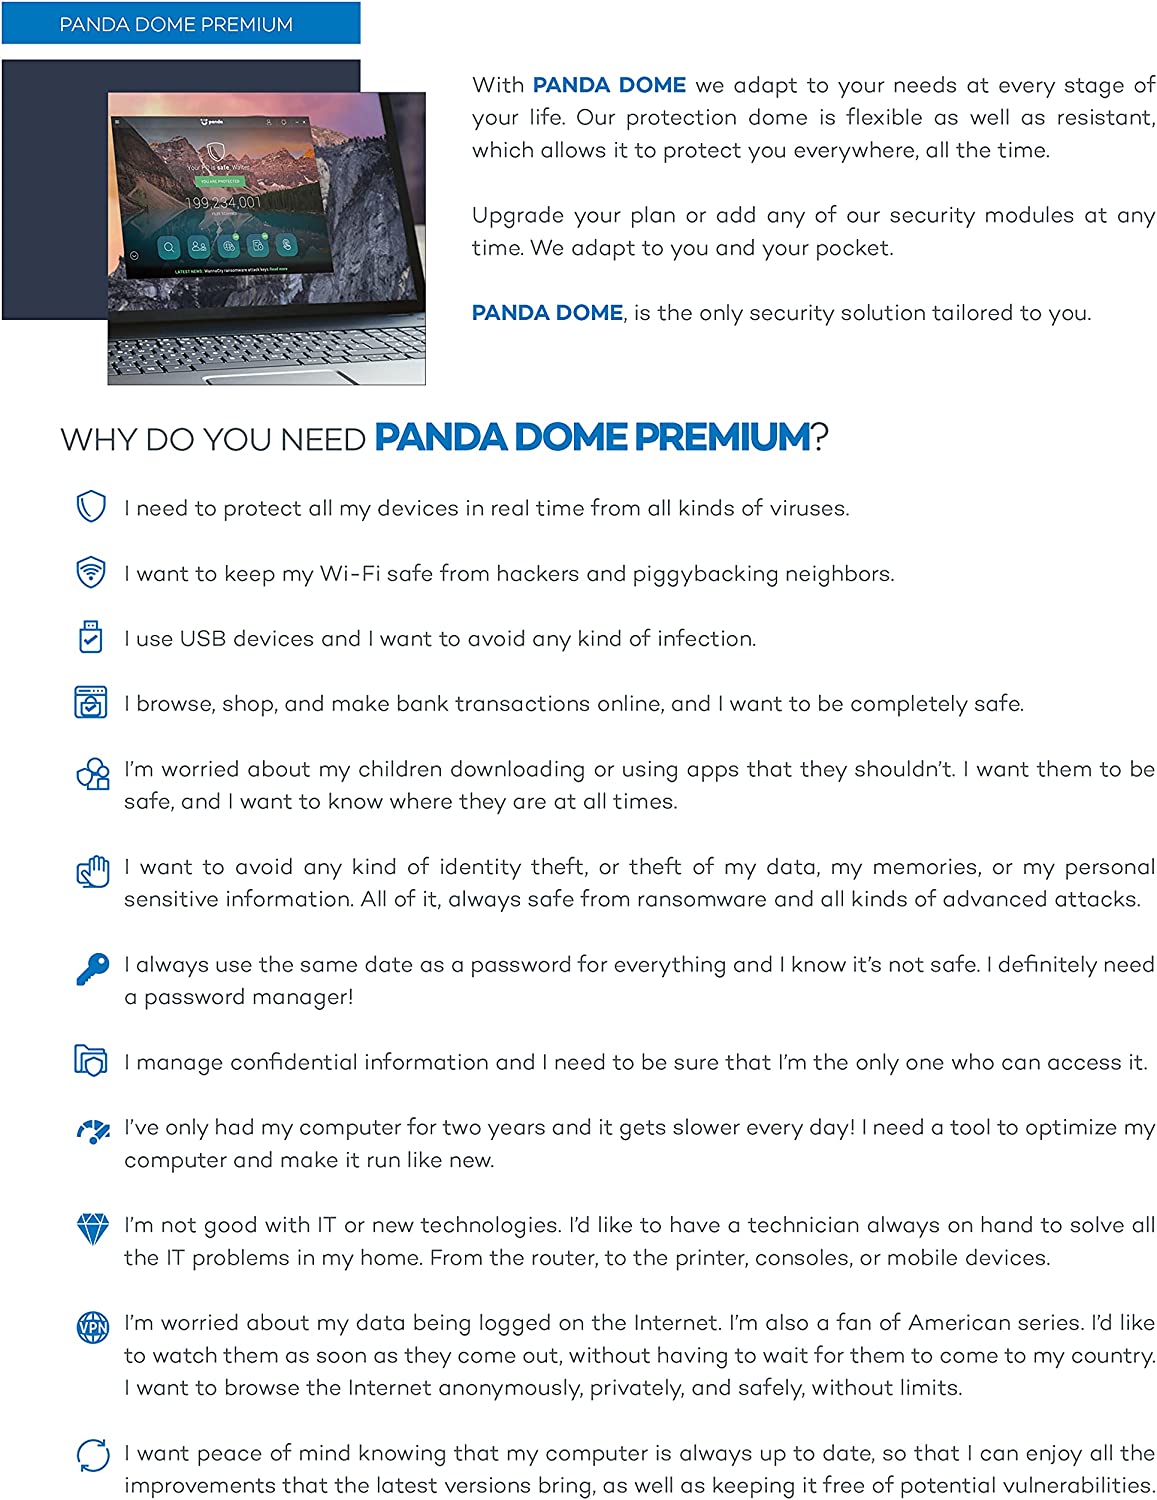 WatchGuard Panda Dome Premium - 1 Year - 3 Licenses (WGDOP021)